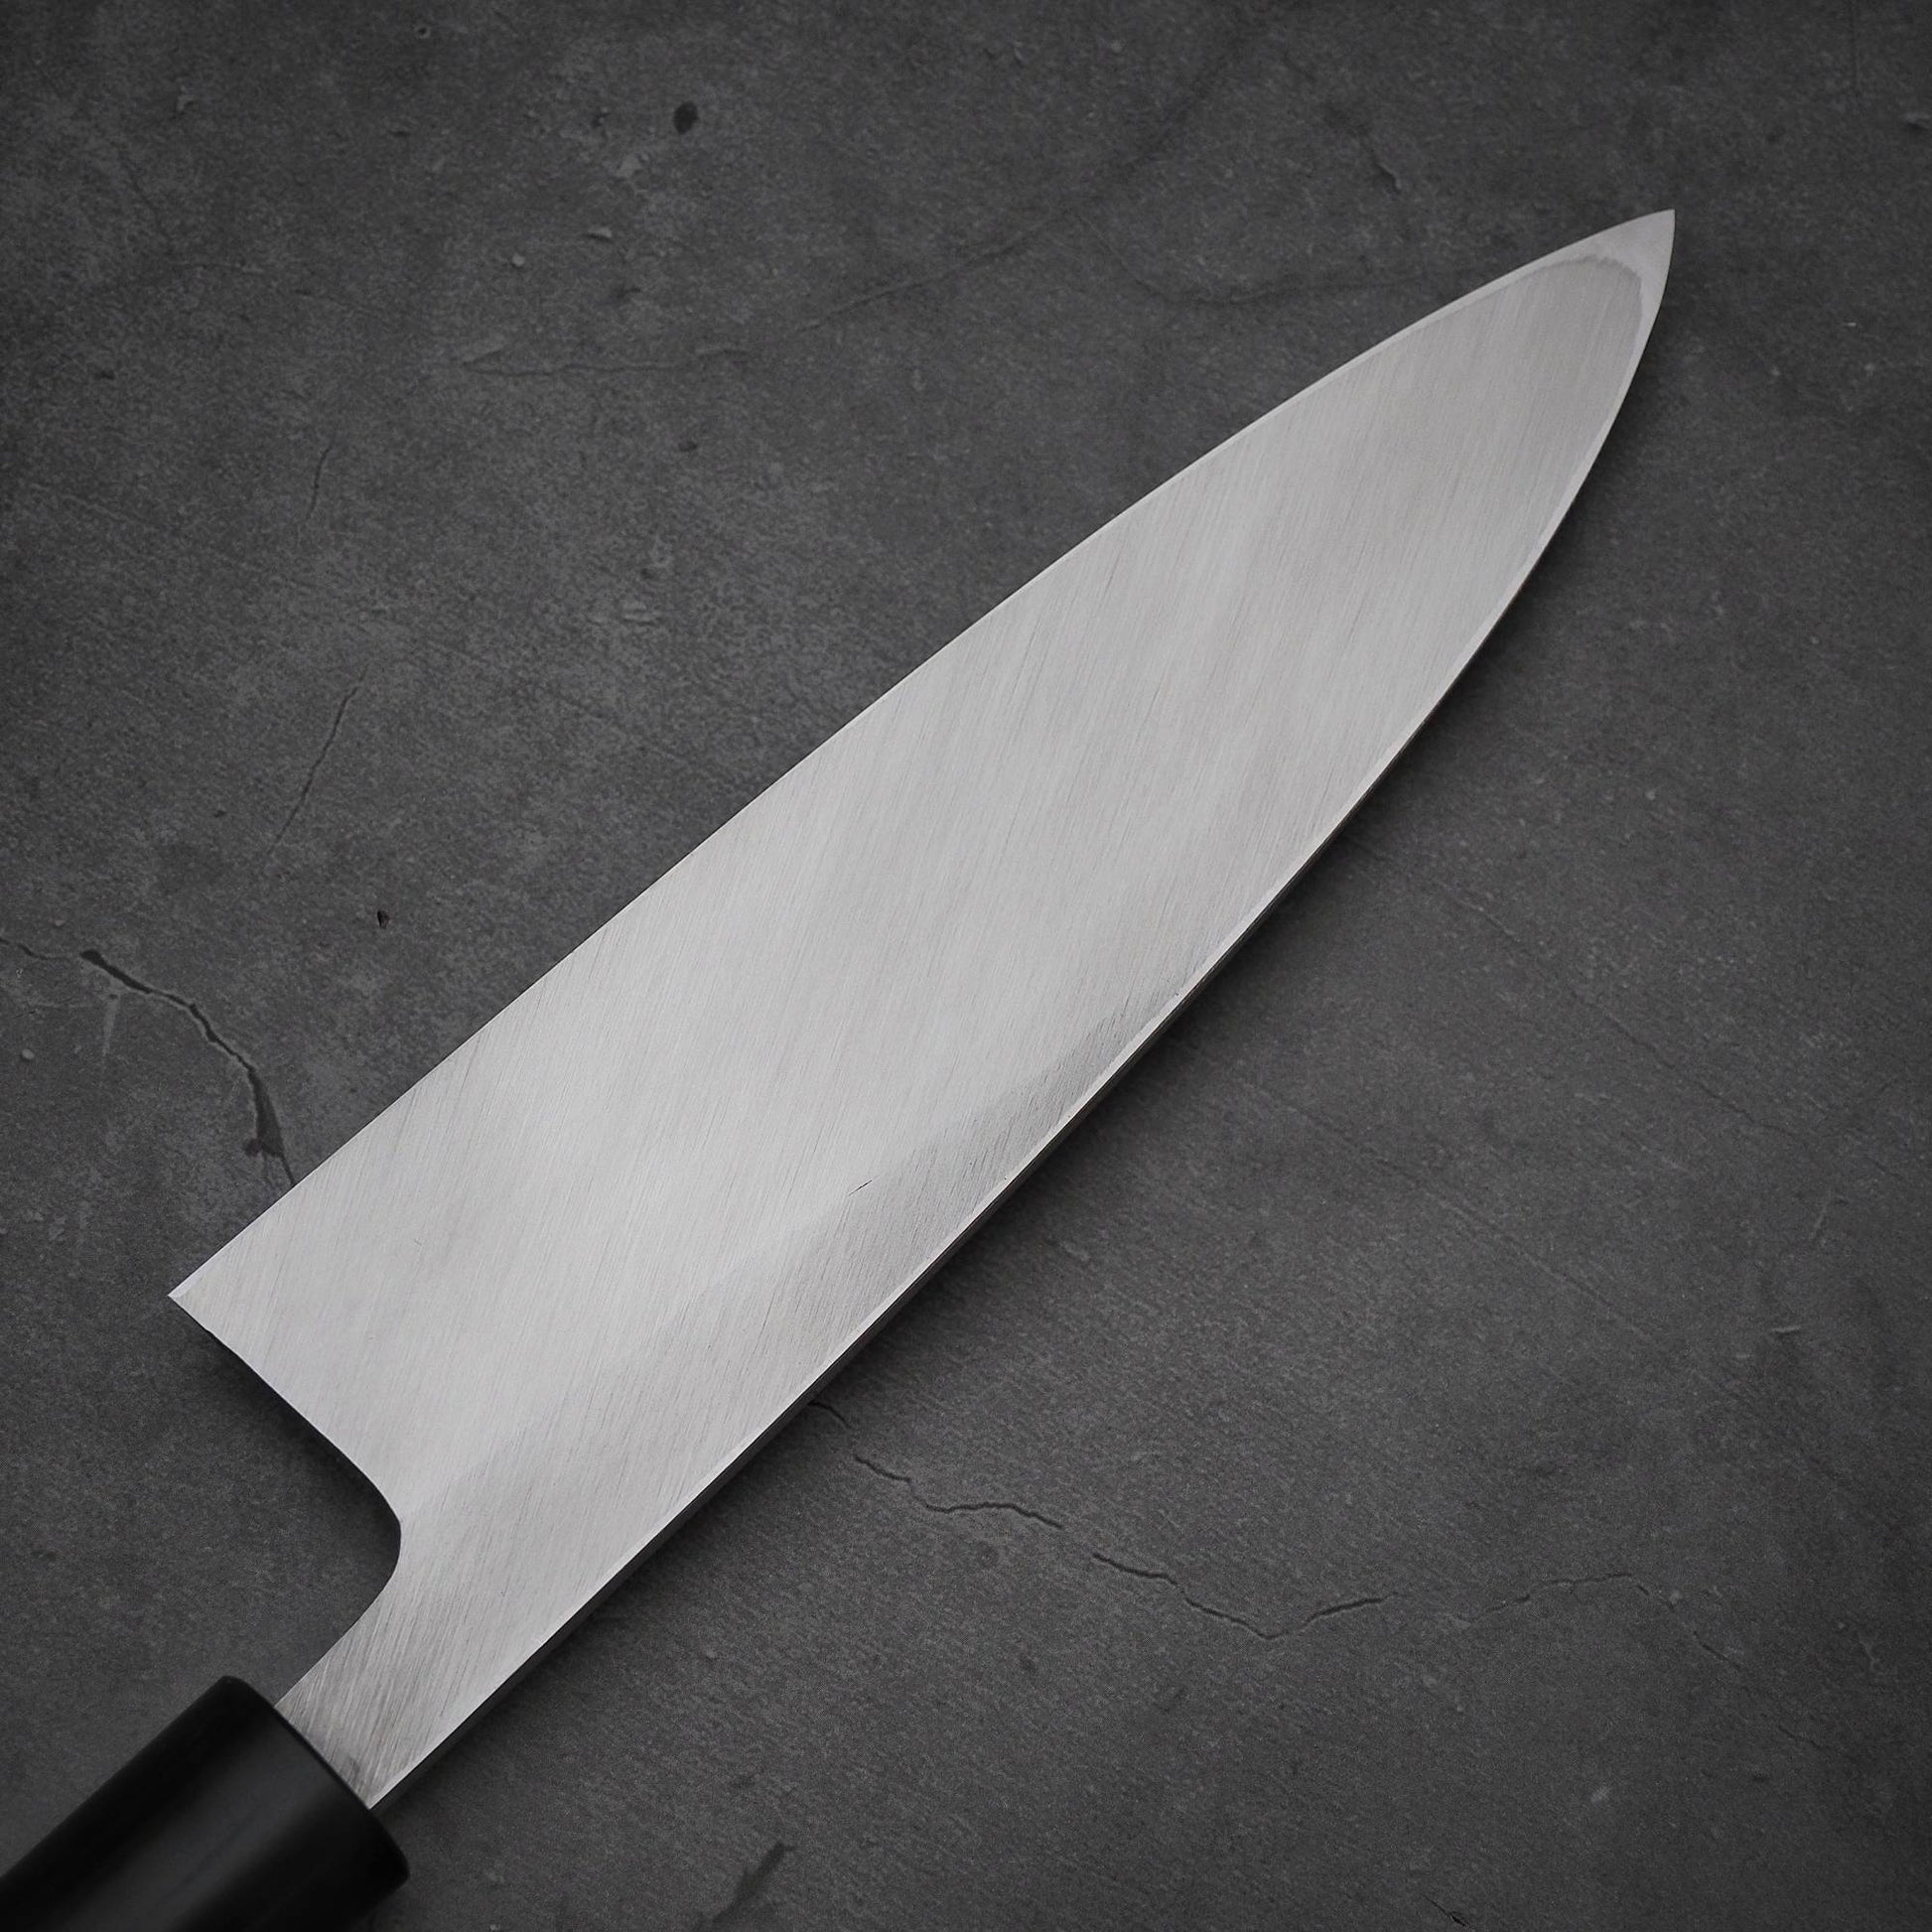 Close up view of the blade of Masamoto KS shirogami#2 ai-deba knife. Image shows the back side